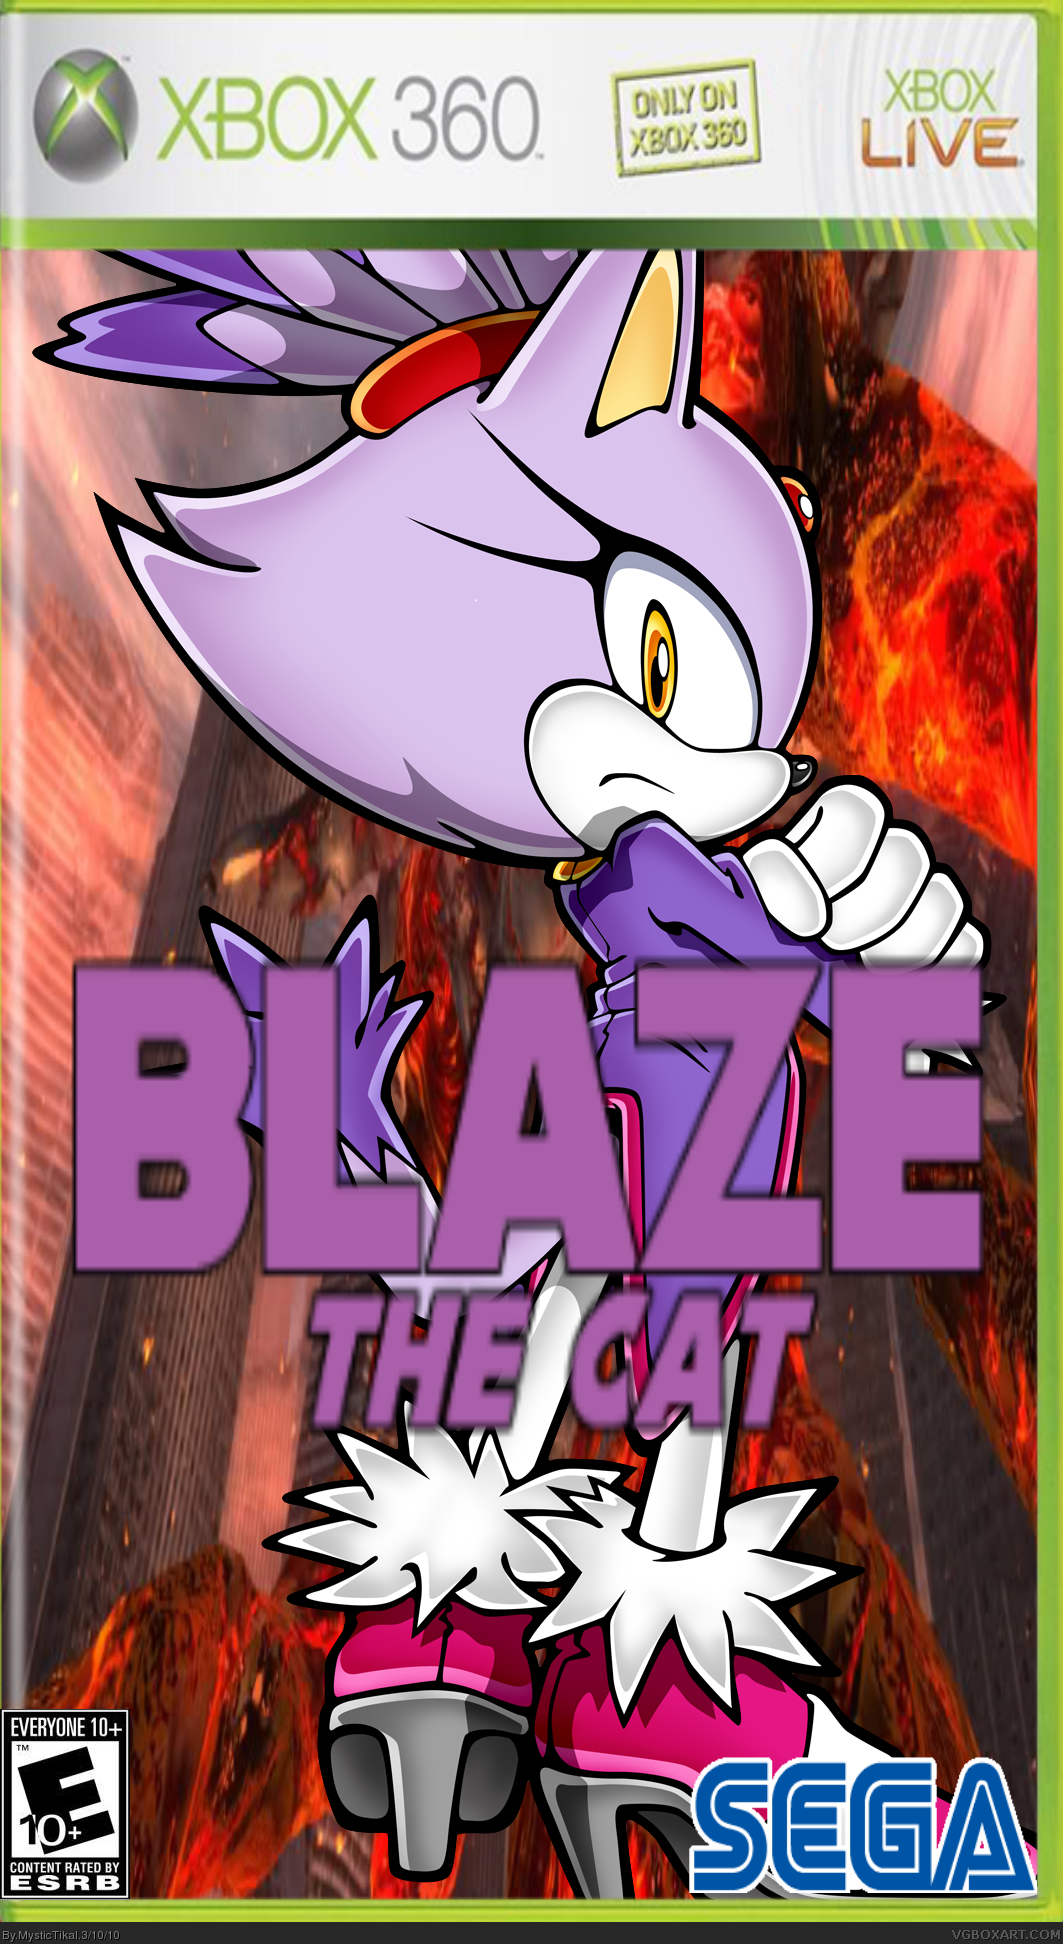 Blaze The Cat box cover